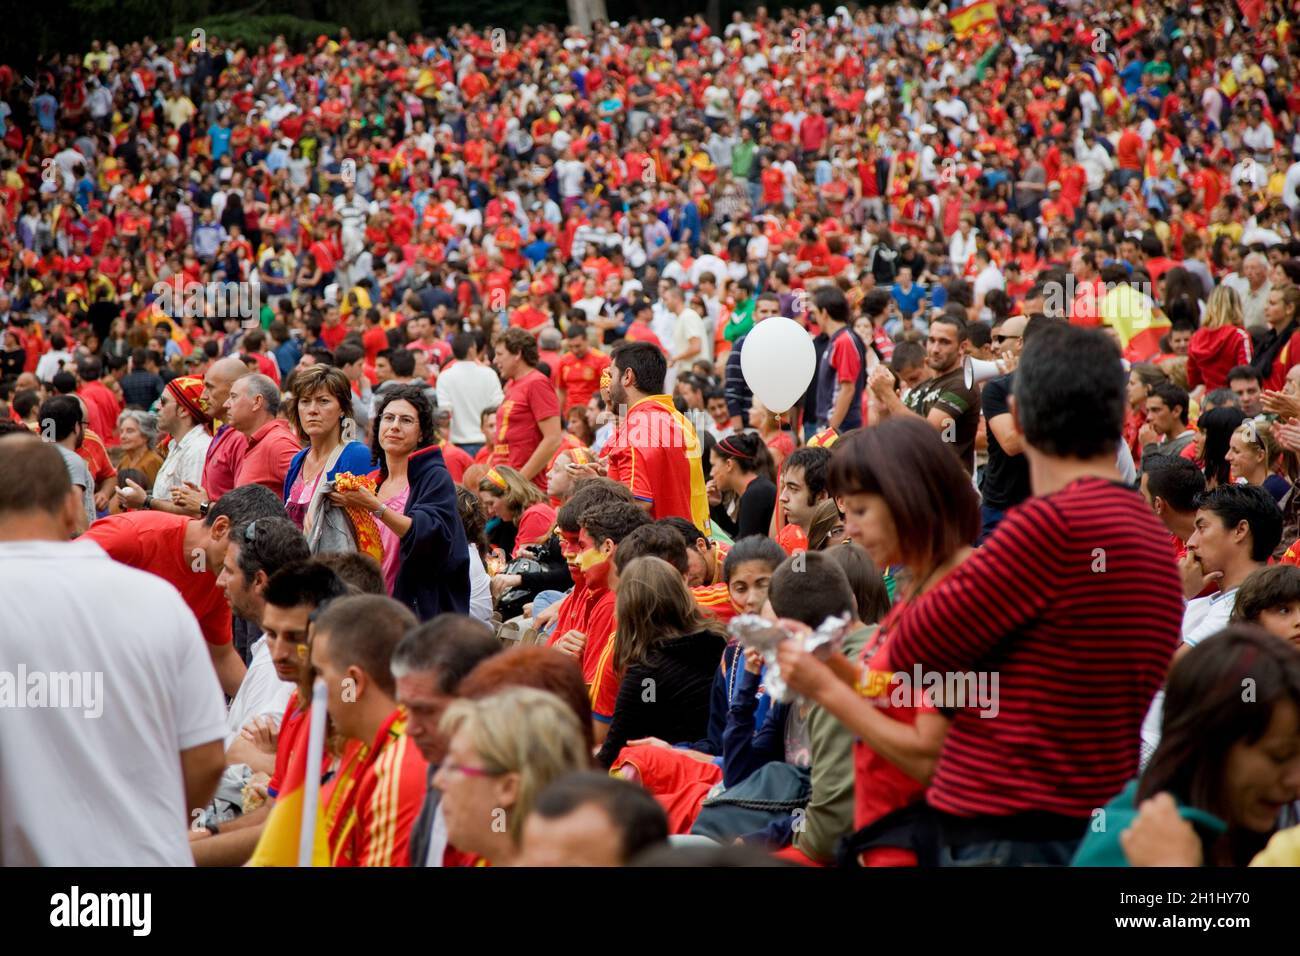 VIGO, SPAIN - JULY 11: Spanish fans during the FIFA Soccer World Cup final game, July 11, 2010 in Vigo, Spain Stock Photo